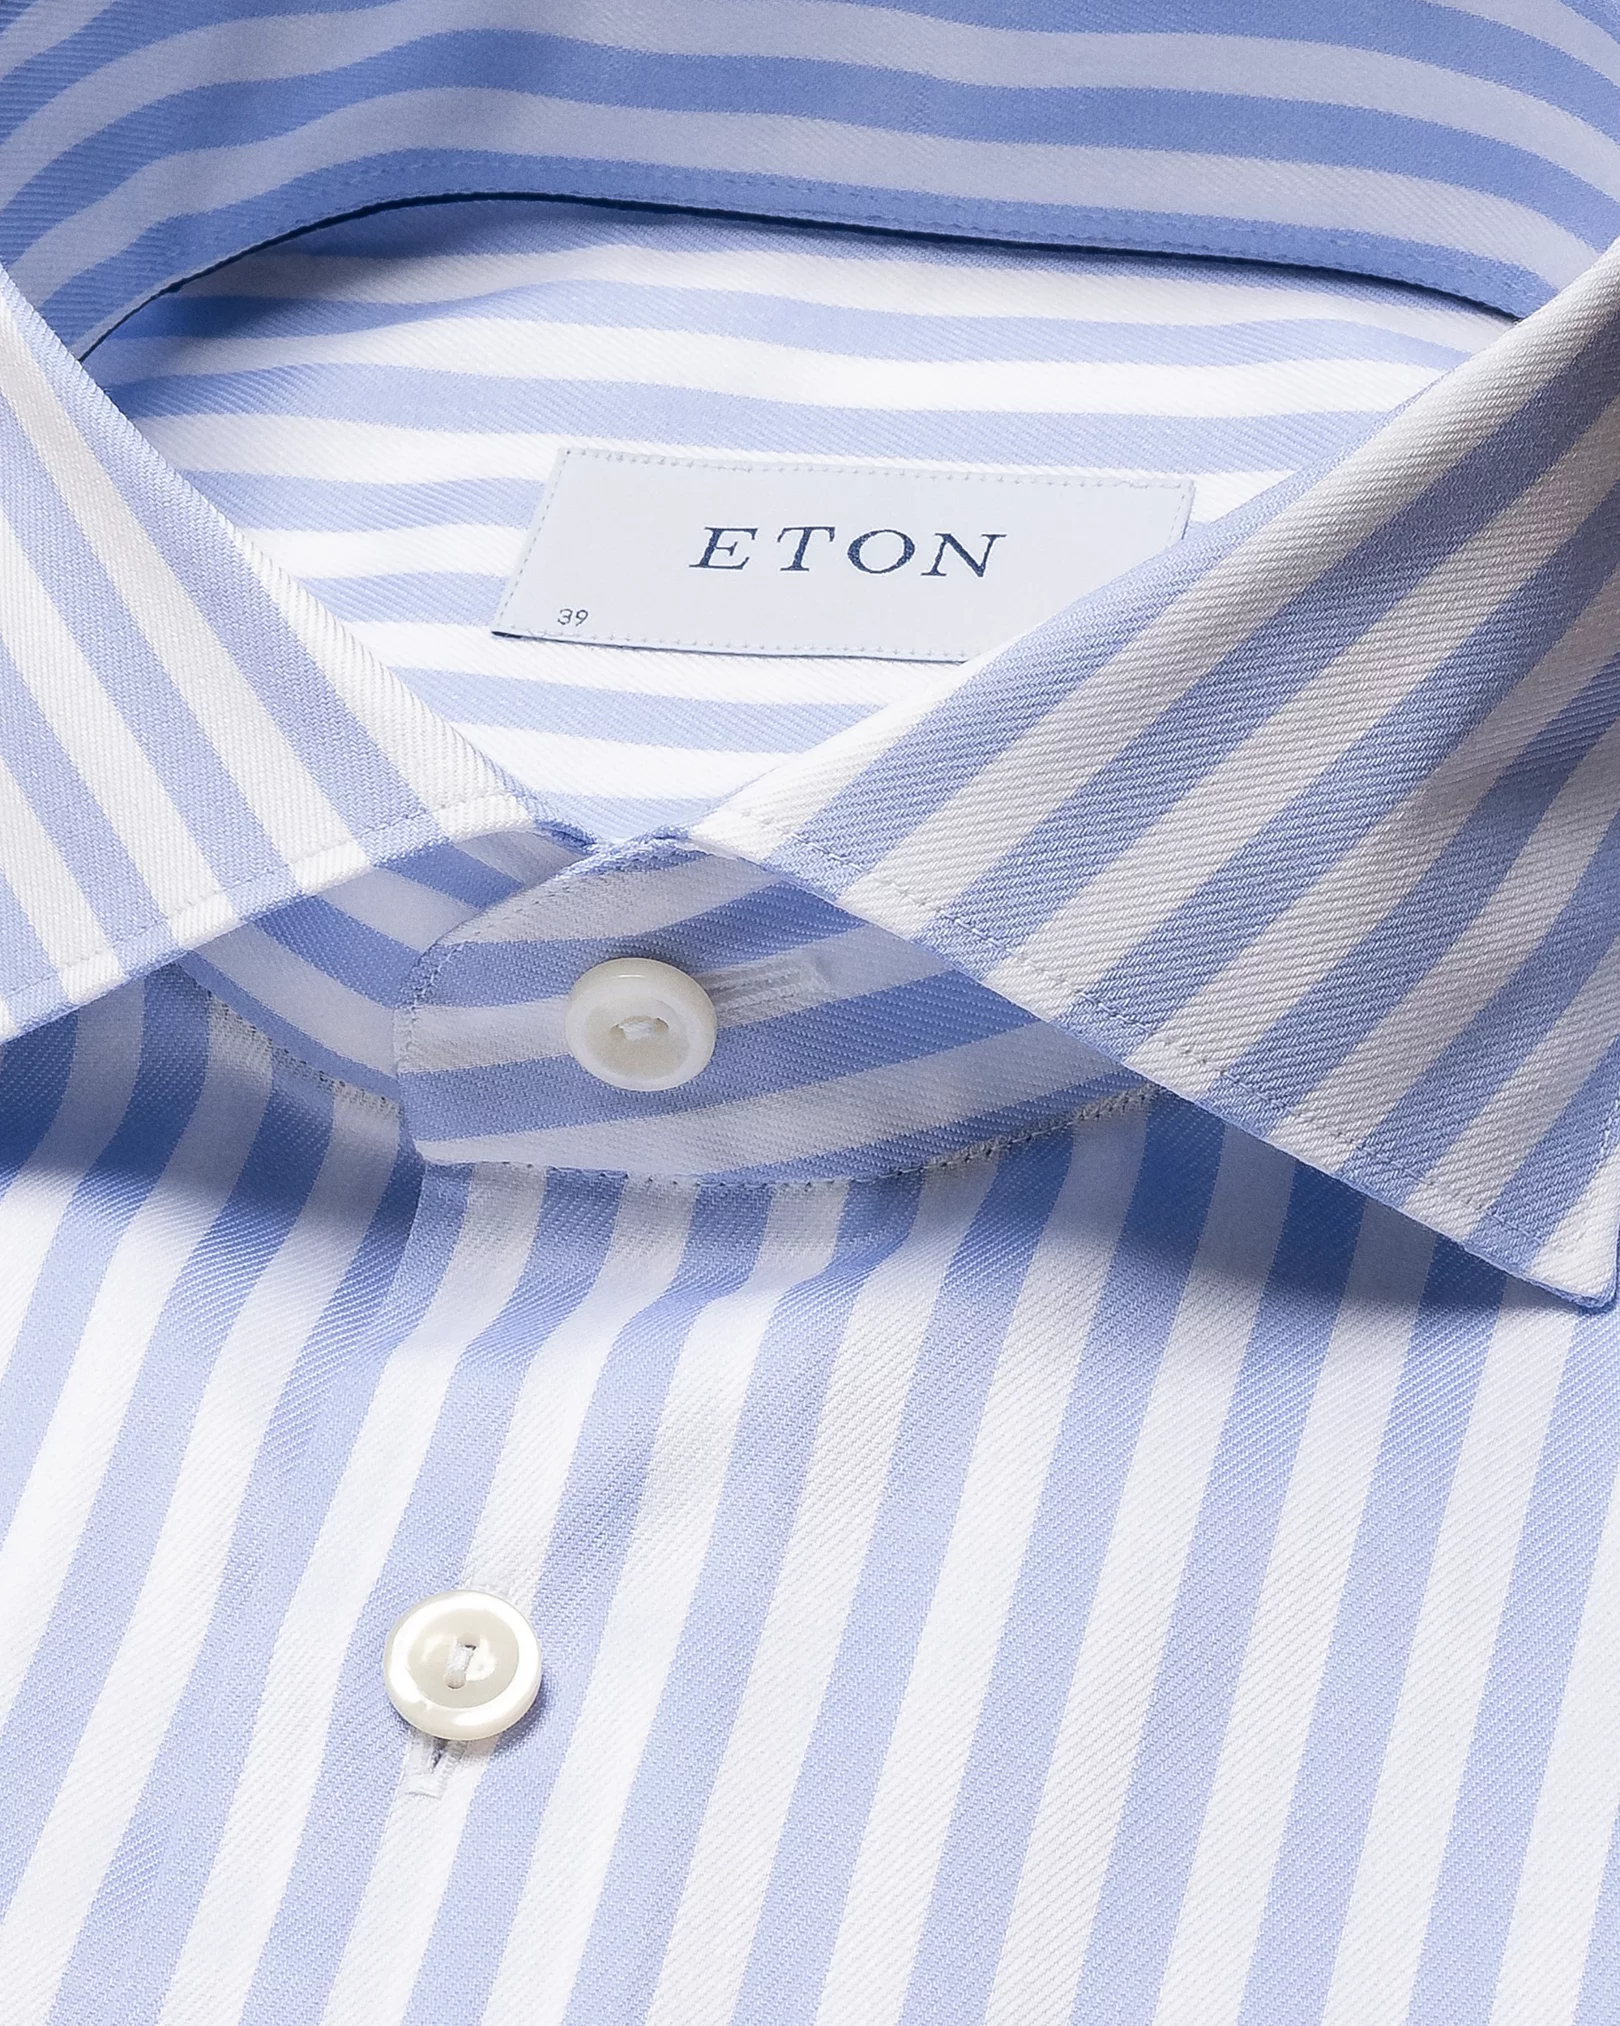 Eton - light blue twill wide spread bold striped